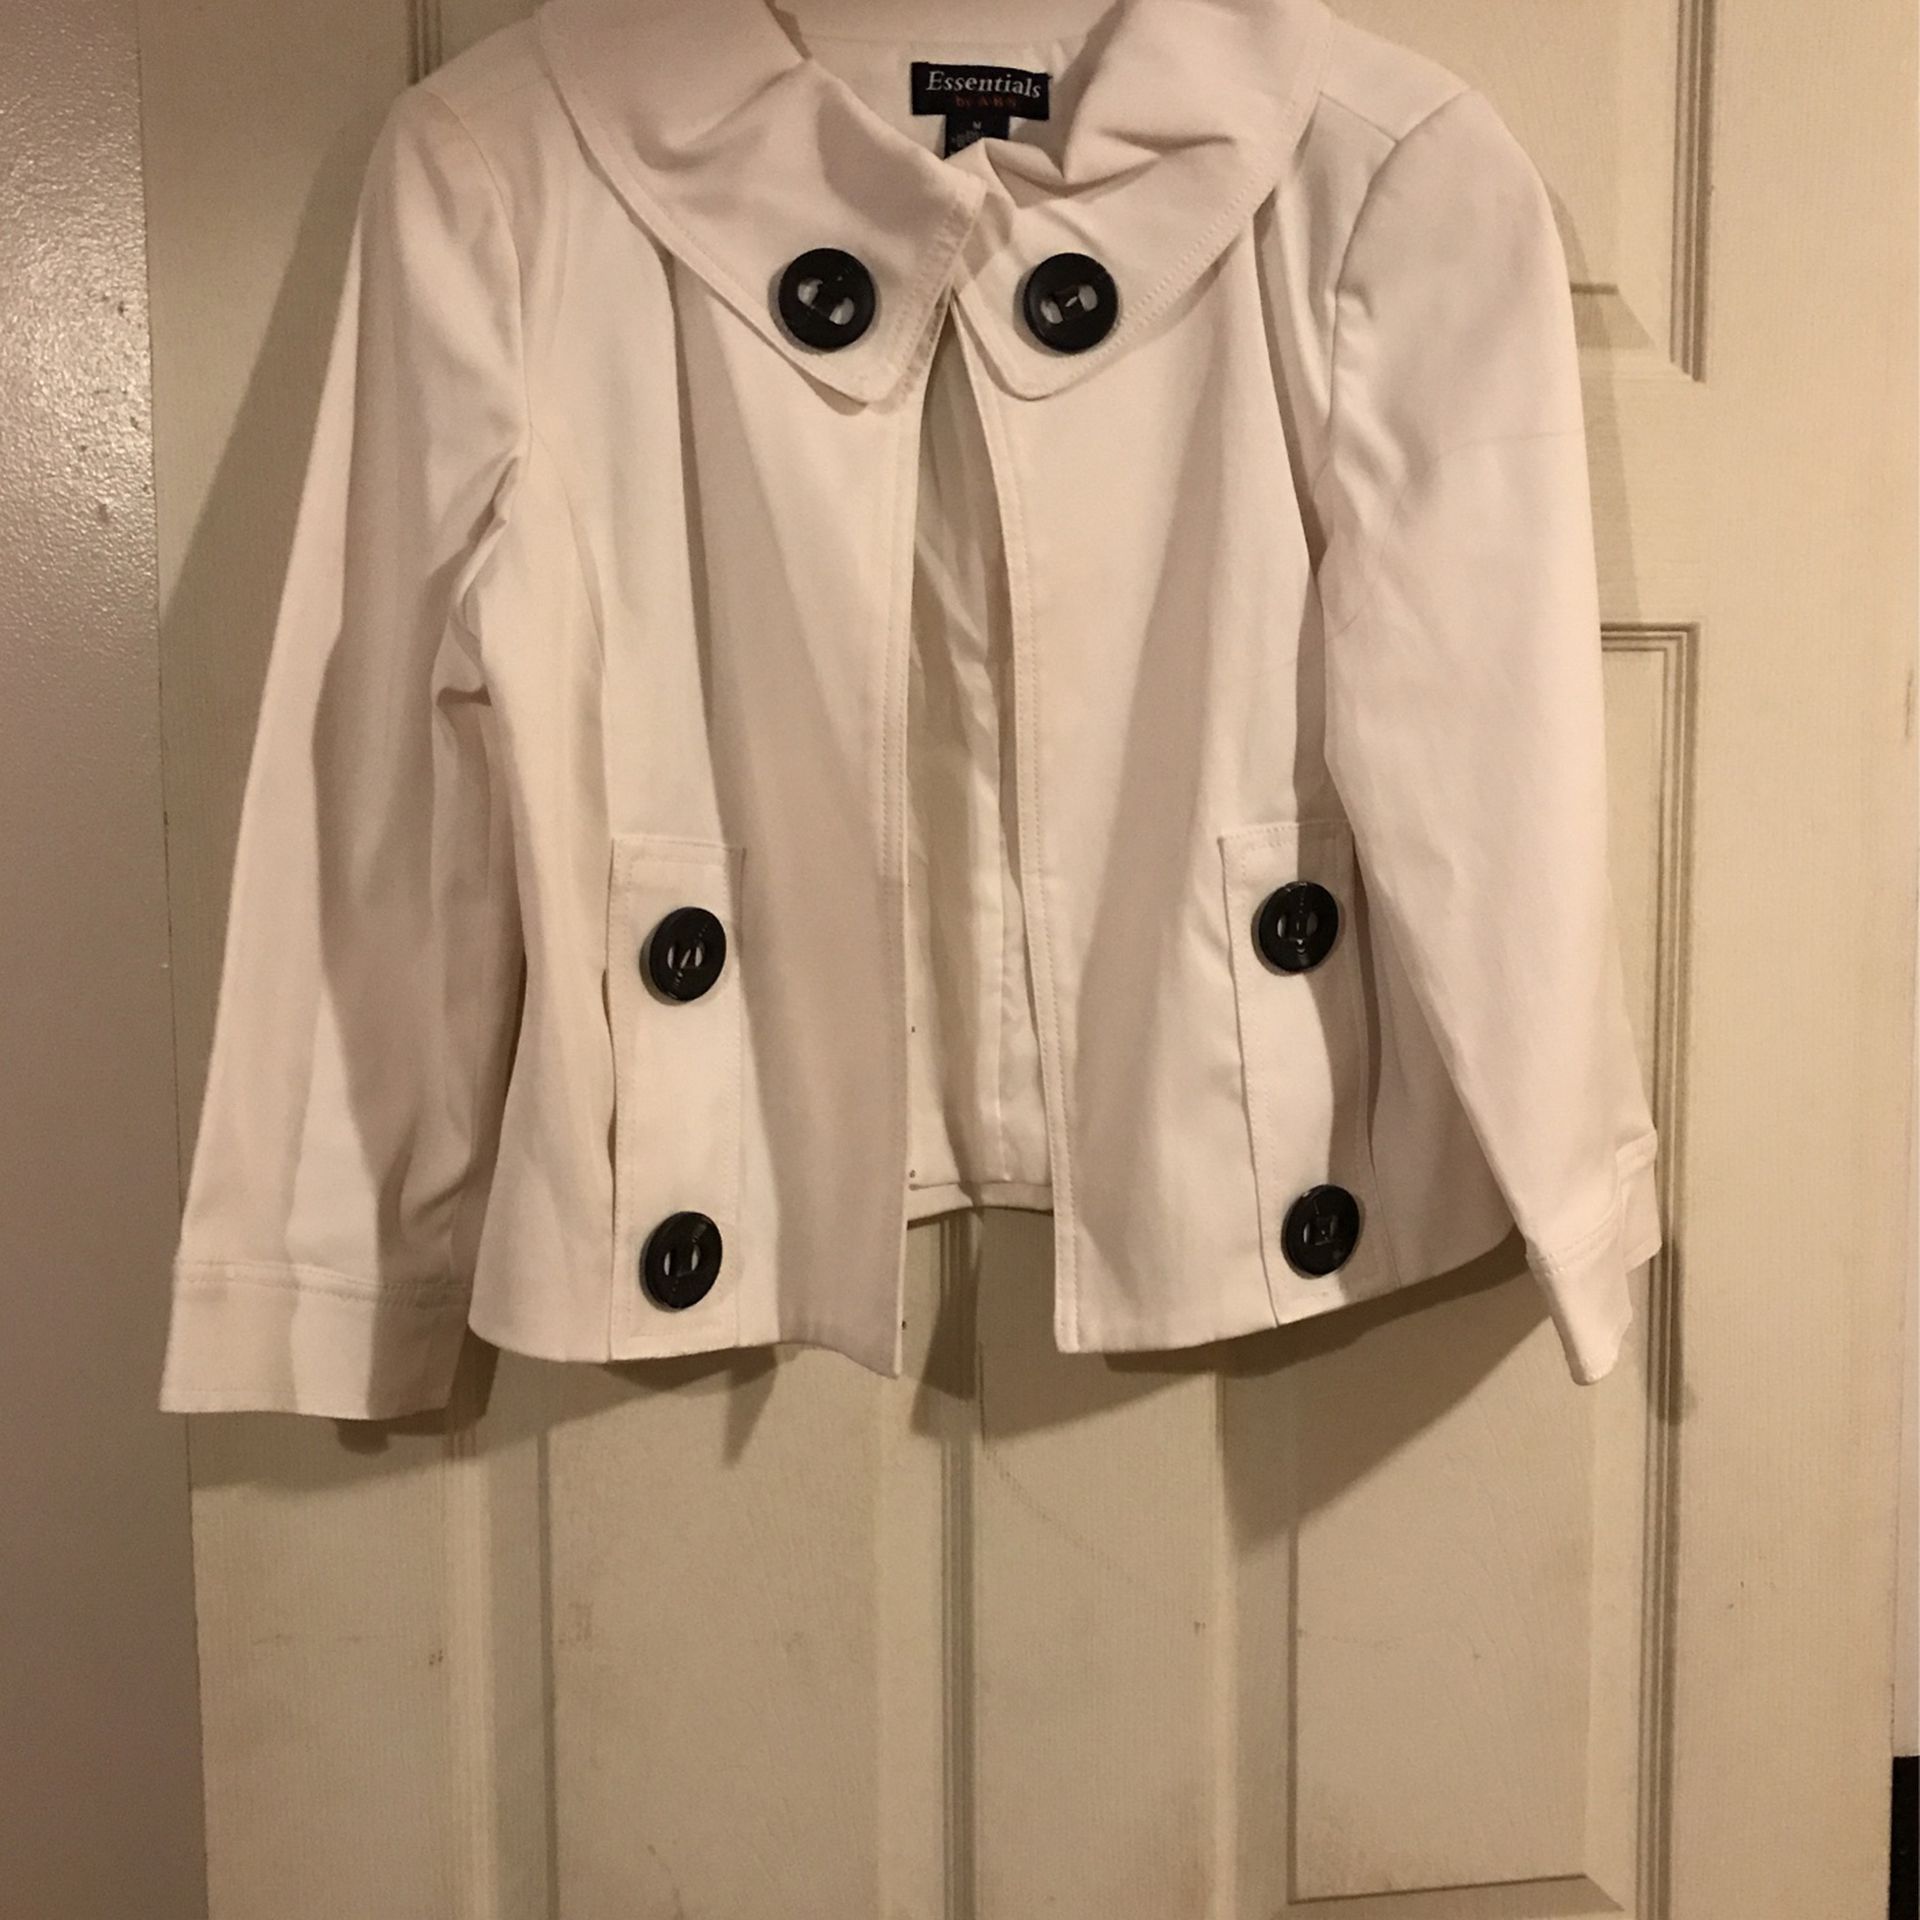 White Vintage Jacket Black Buttons 